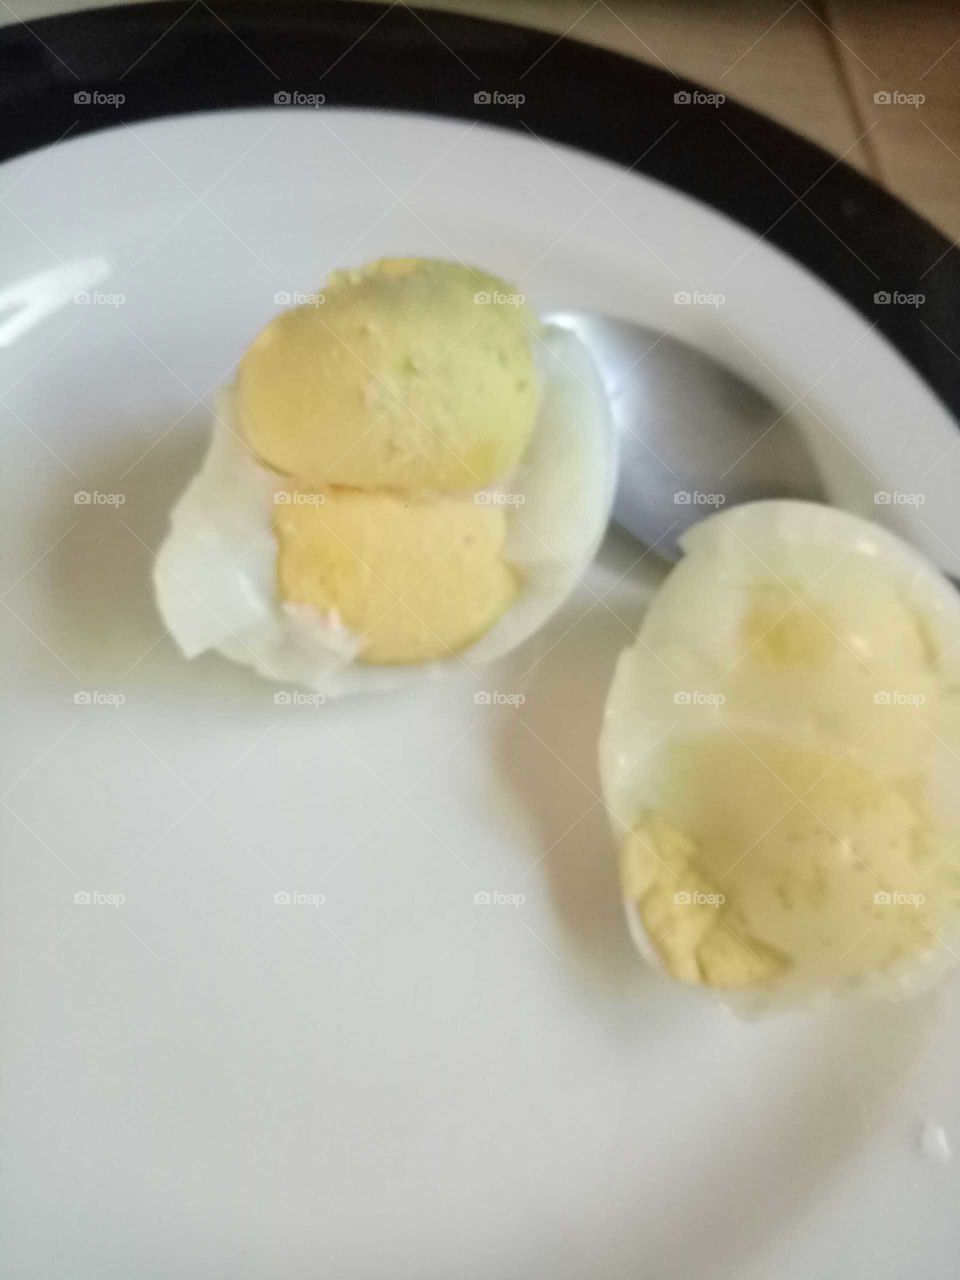 Double egg yolk